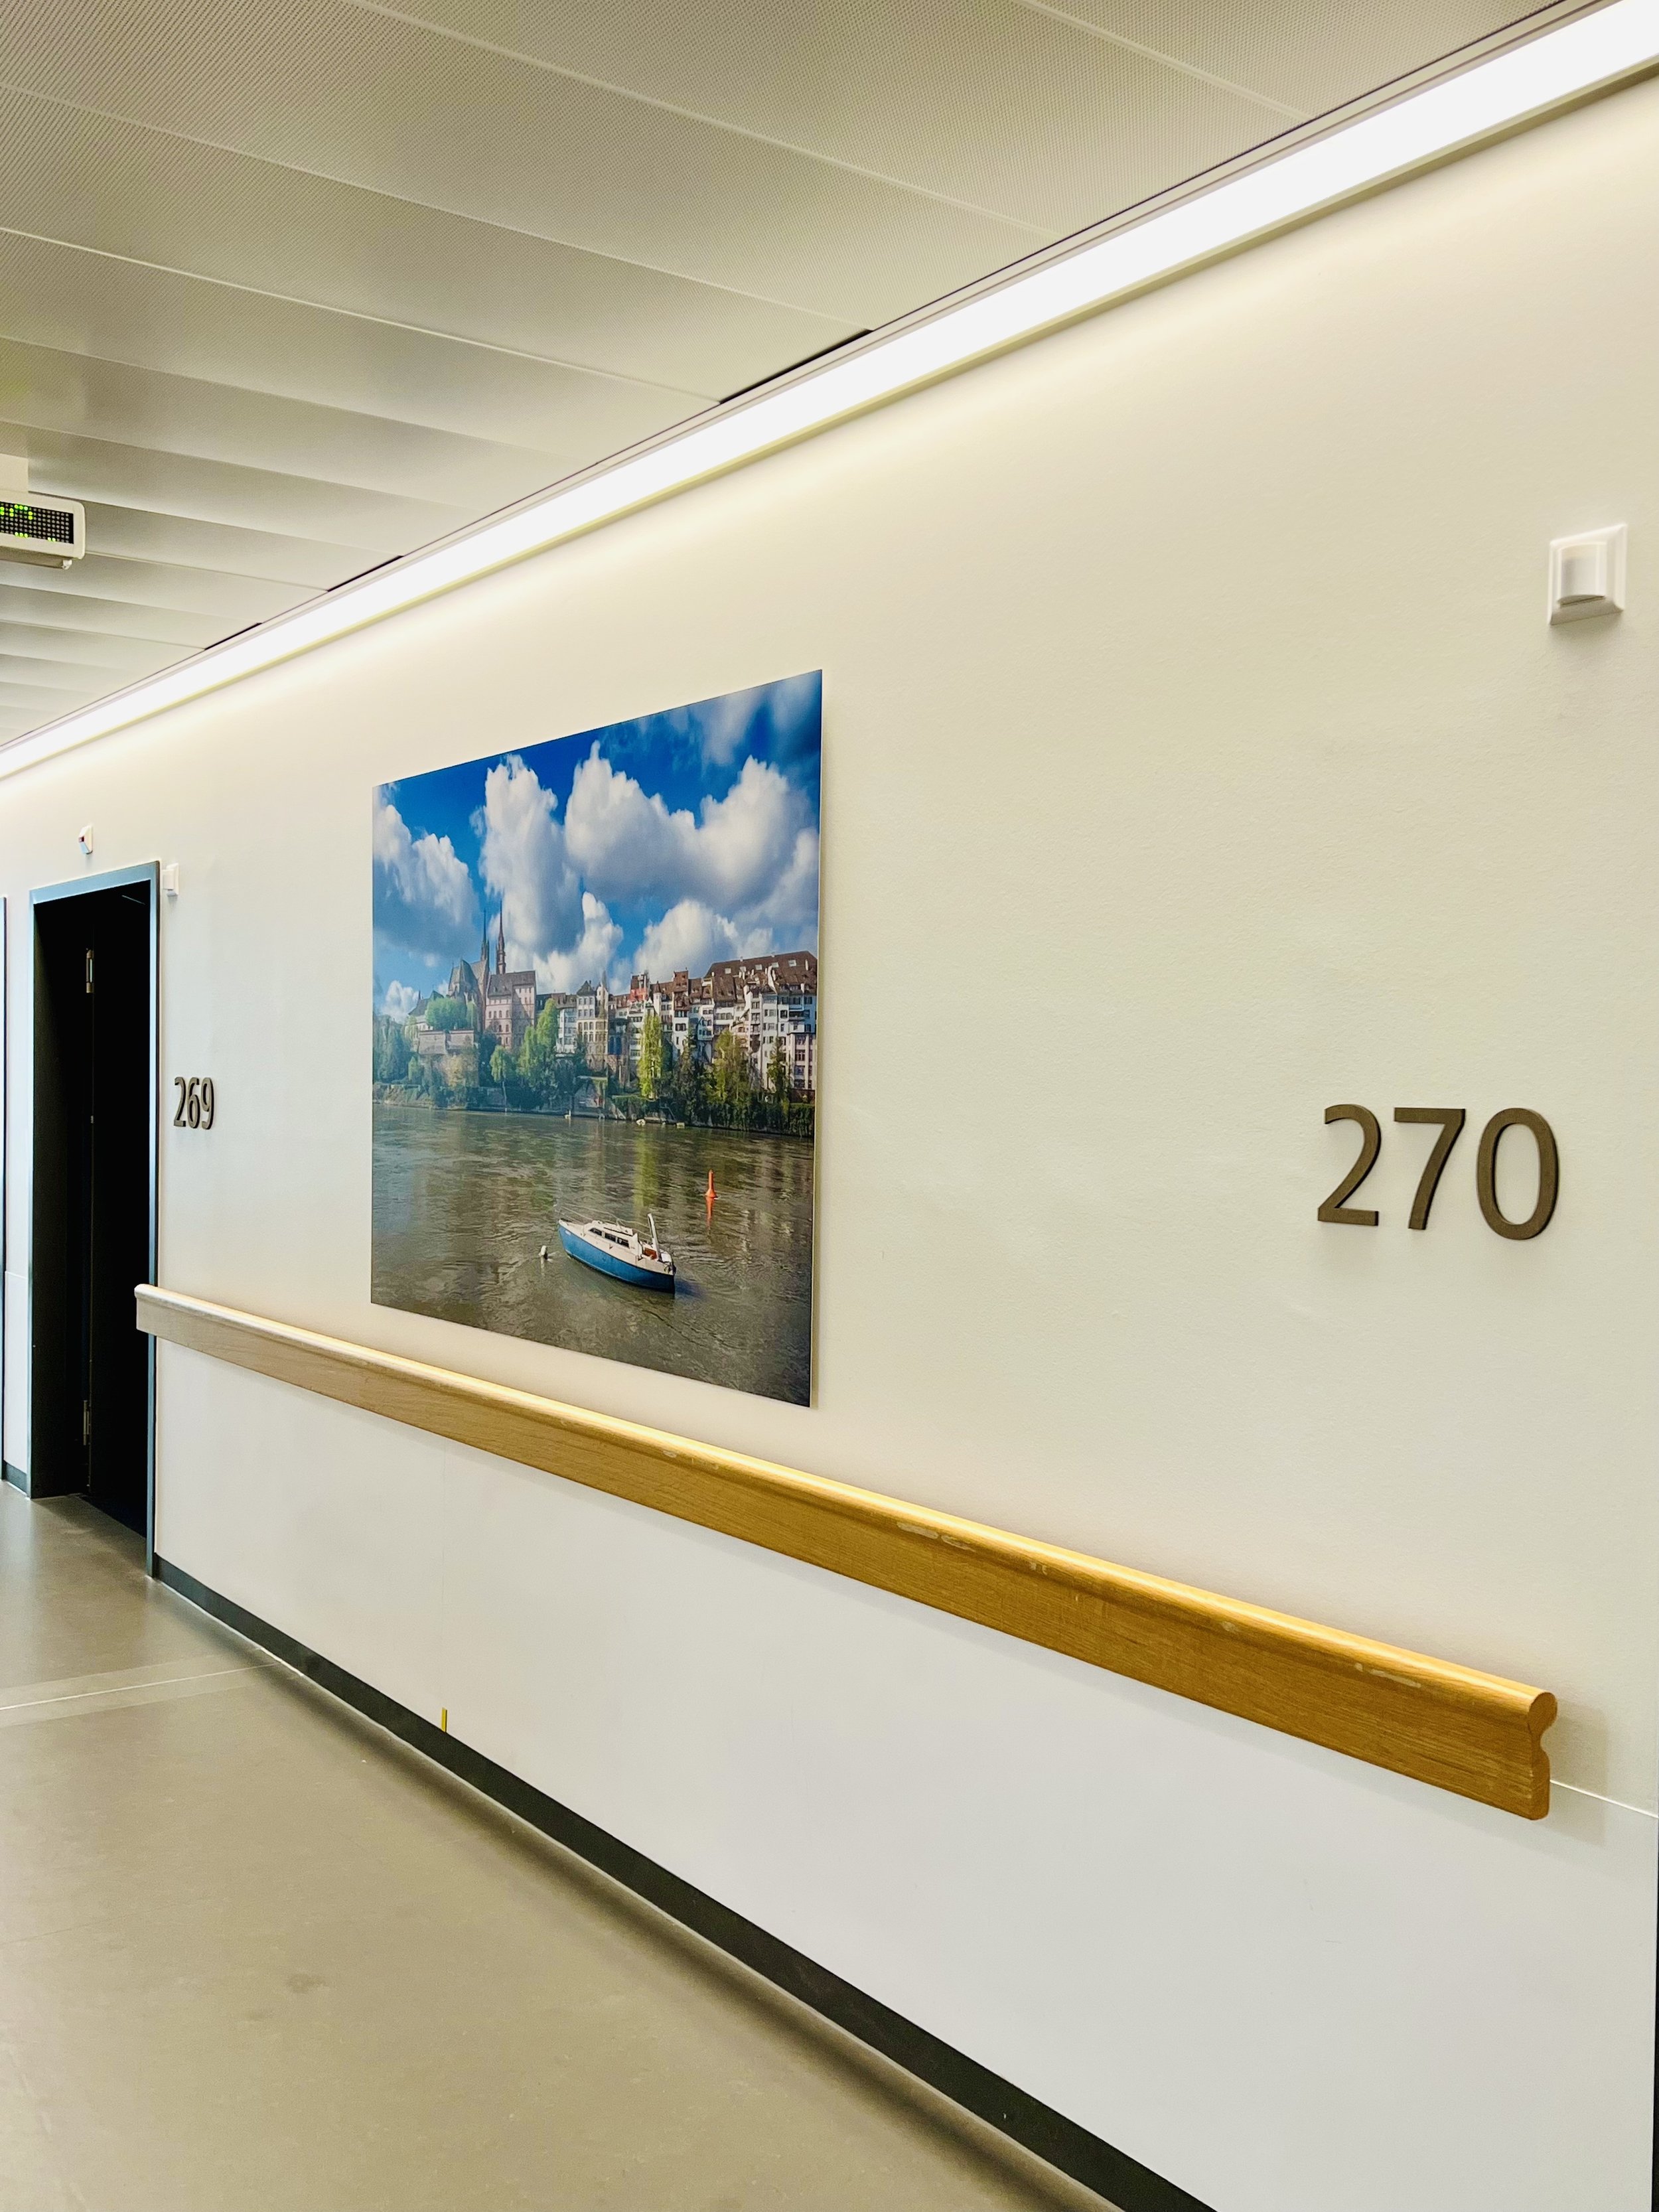  images on the hallways walls in Felix Platter Hospital in Basel (Copy)